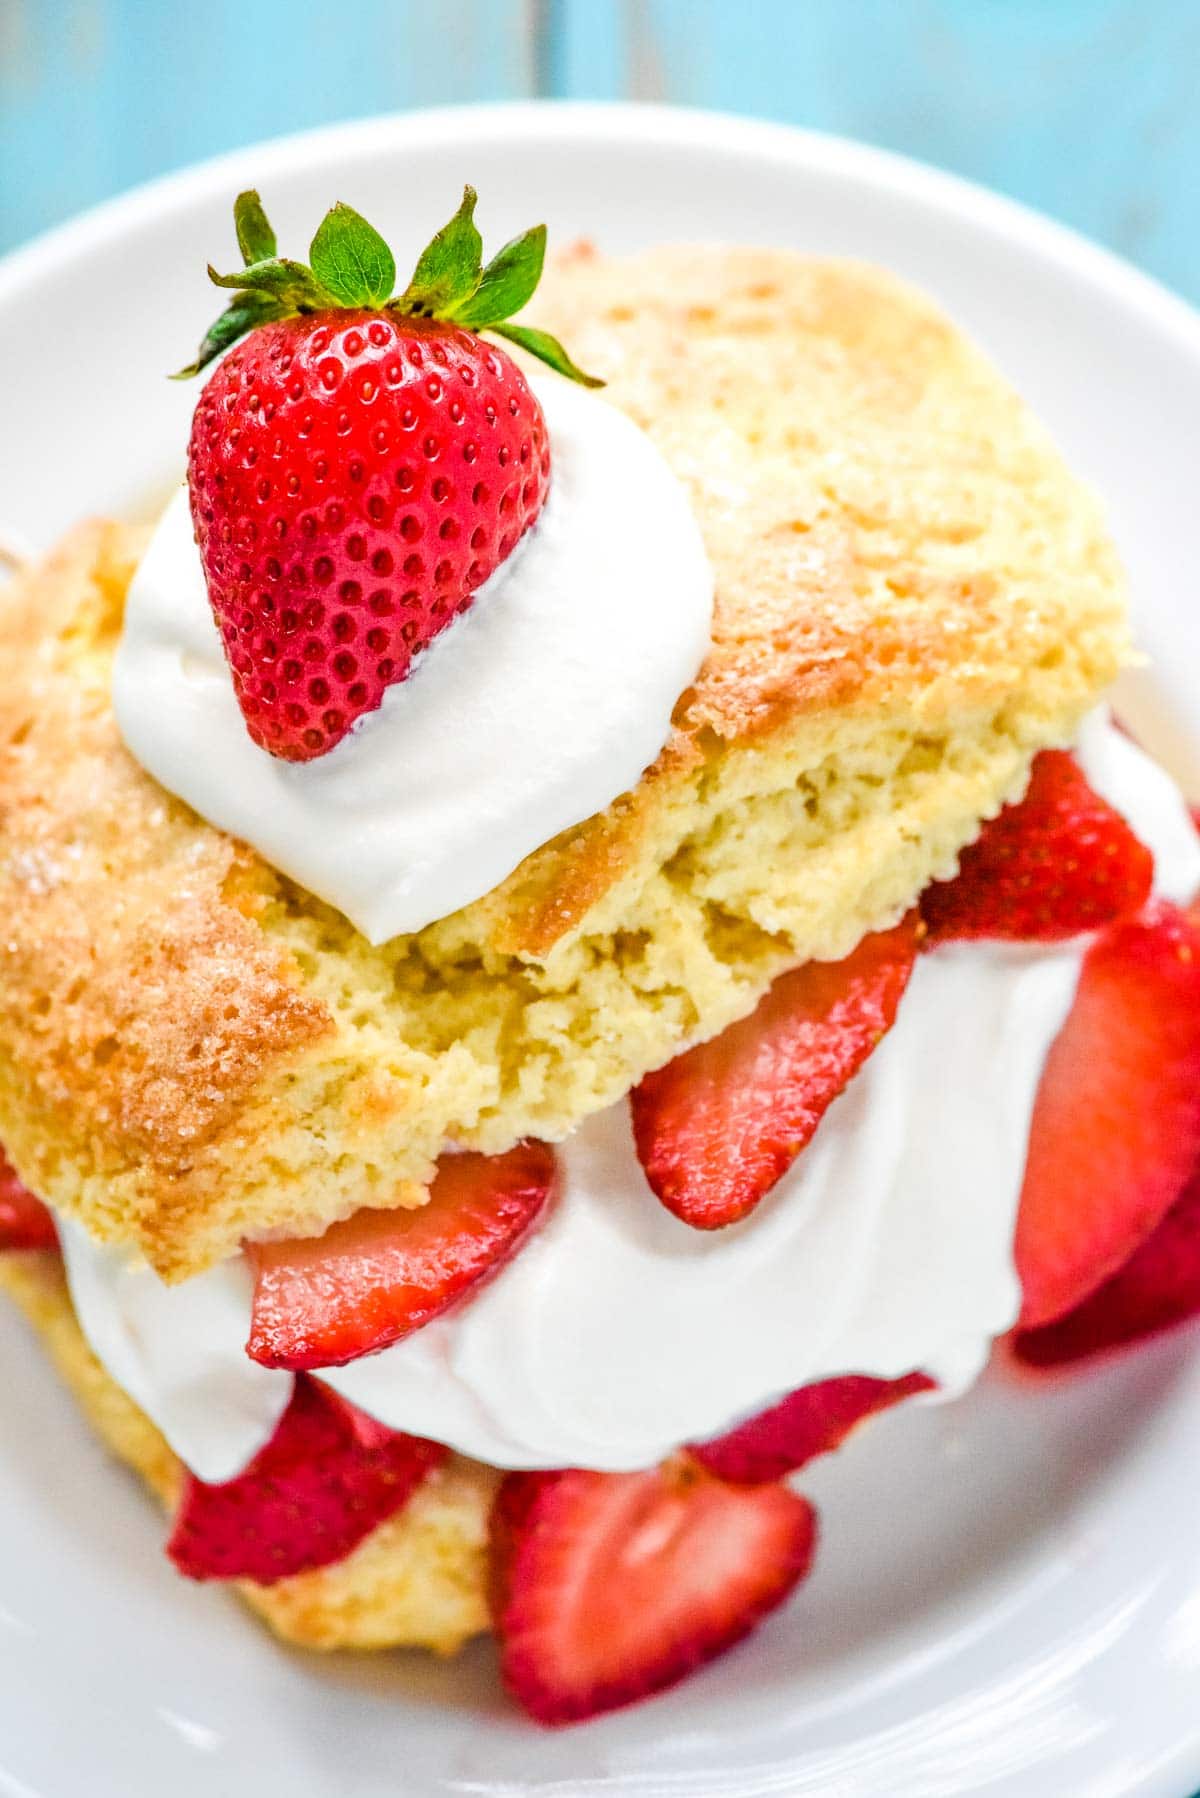 Strawberry Shortcake recipe easy and homemade.